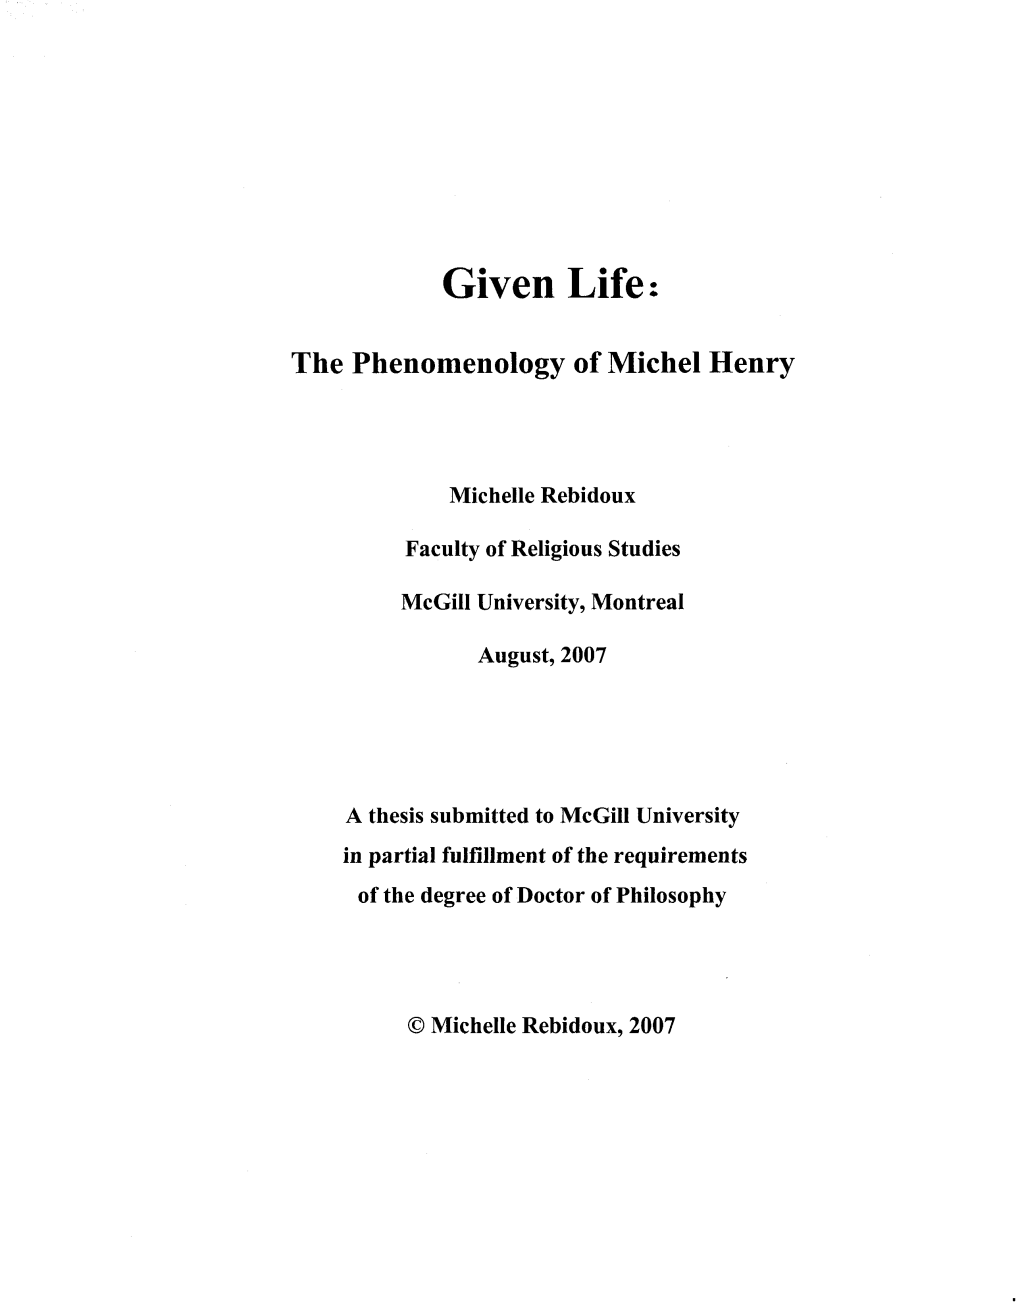 The Phenomenology of Michel Henry